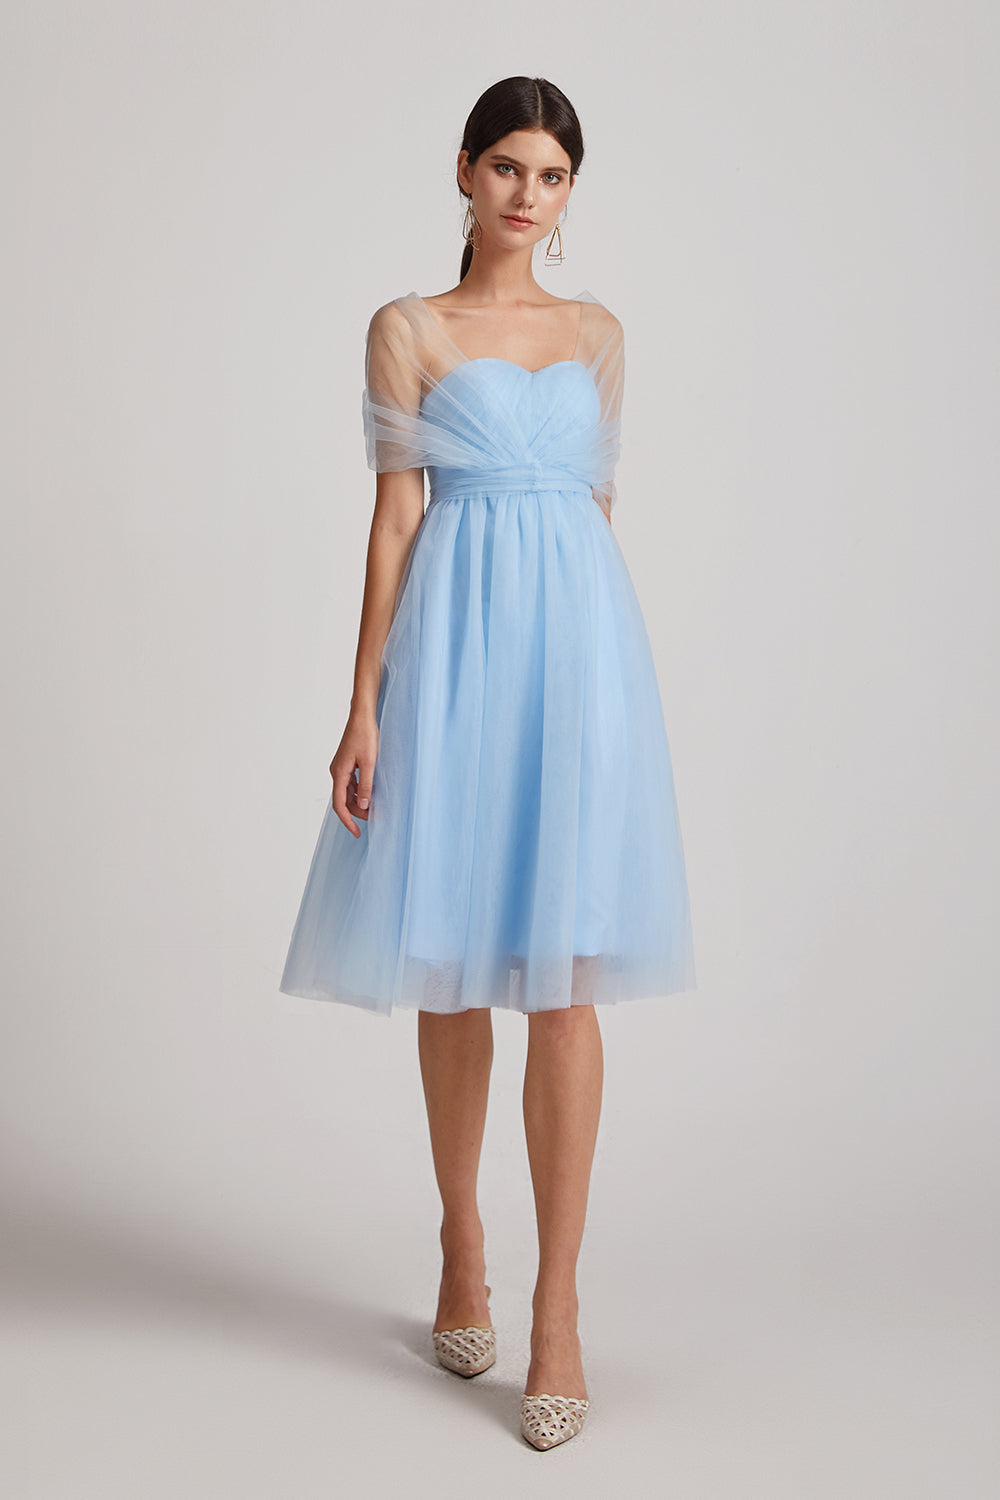 a-line blue short bridesmaid gowns